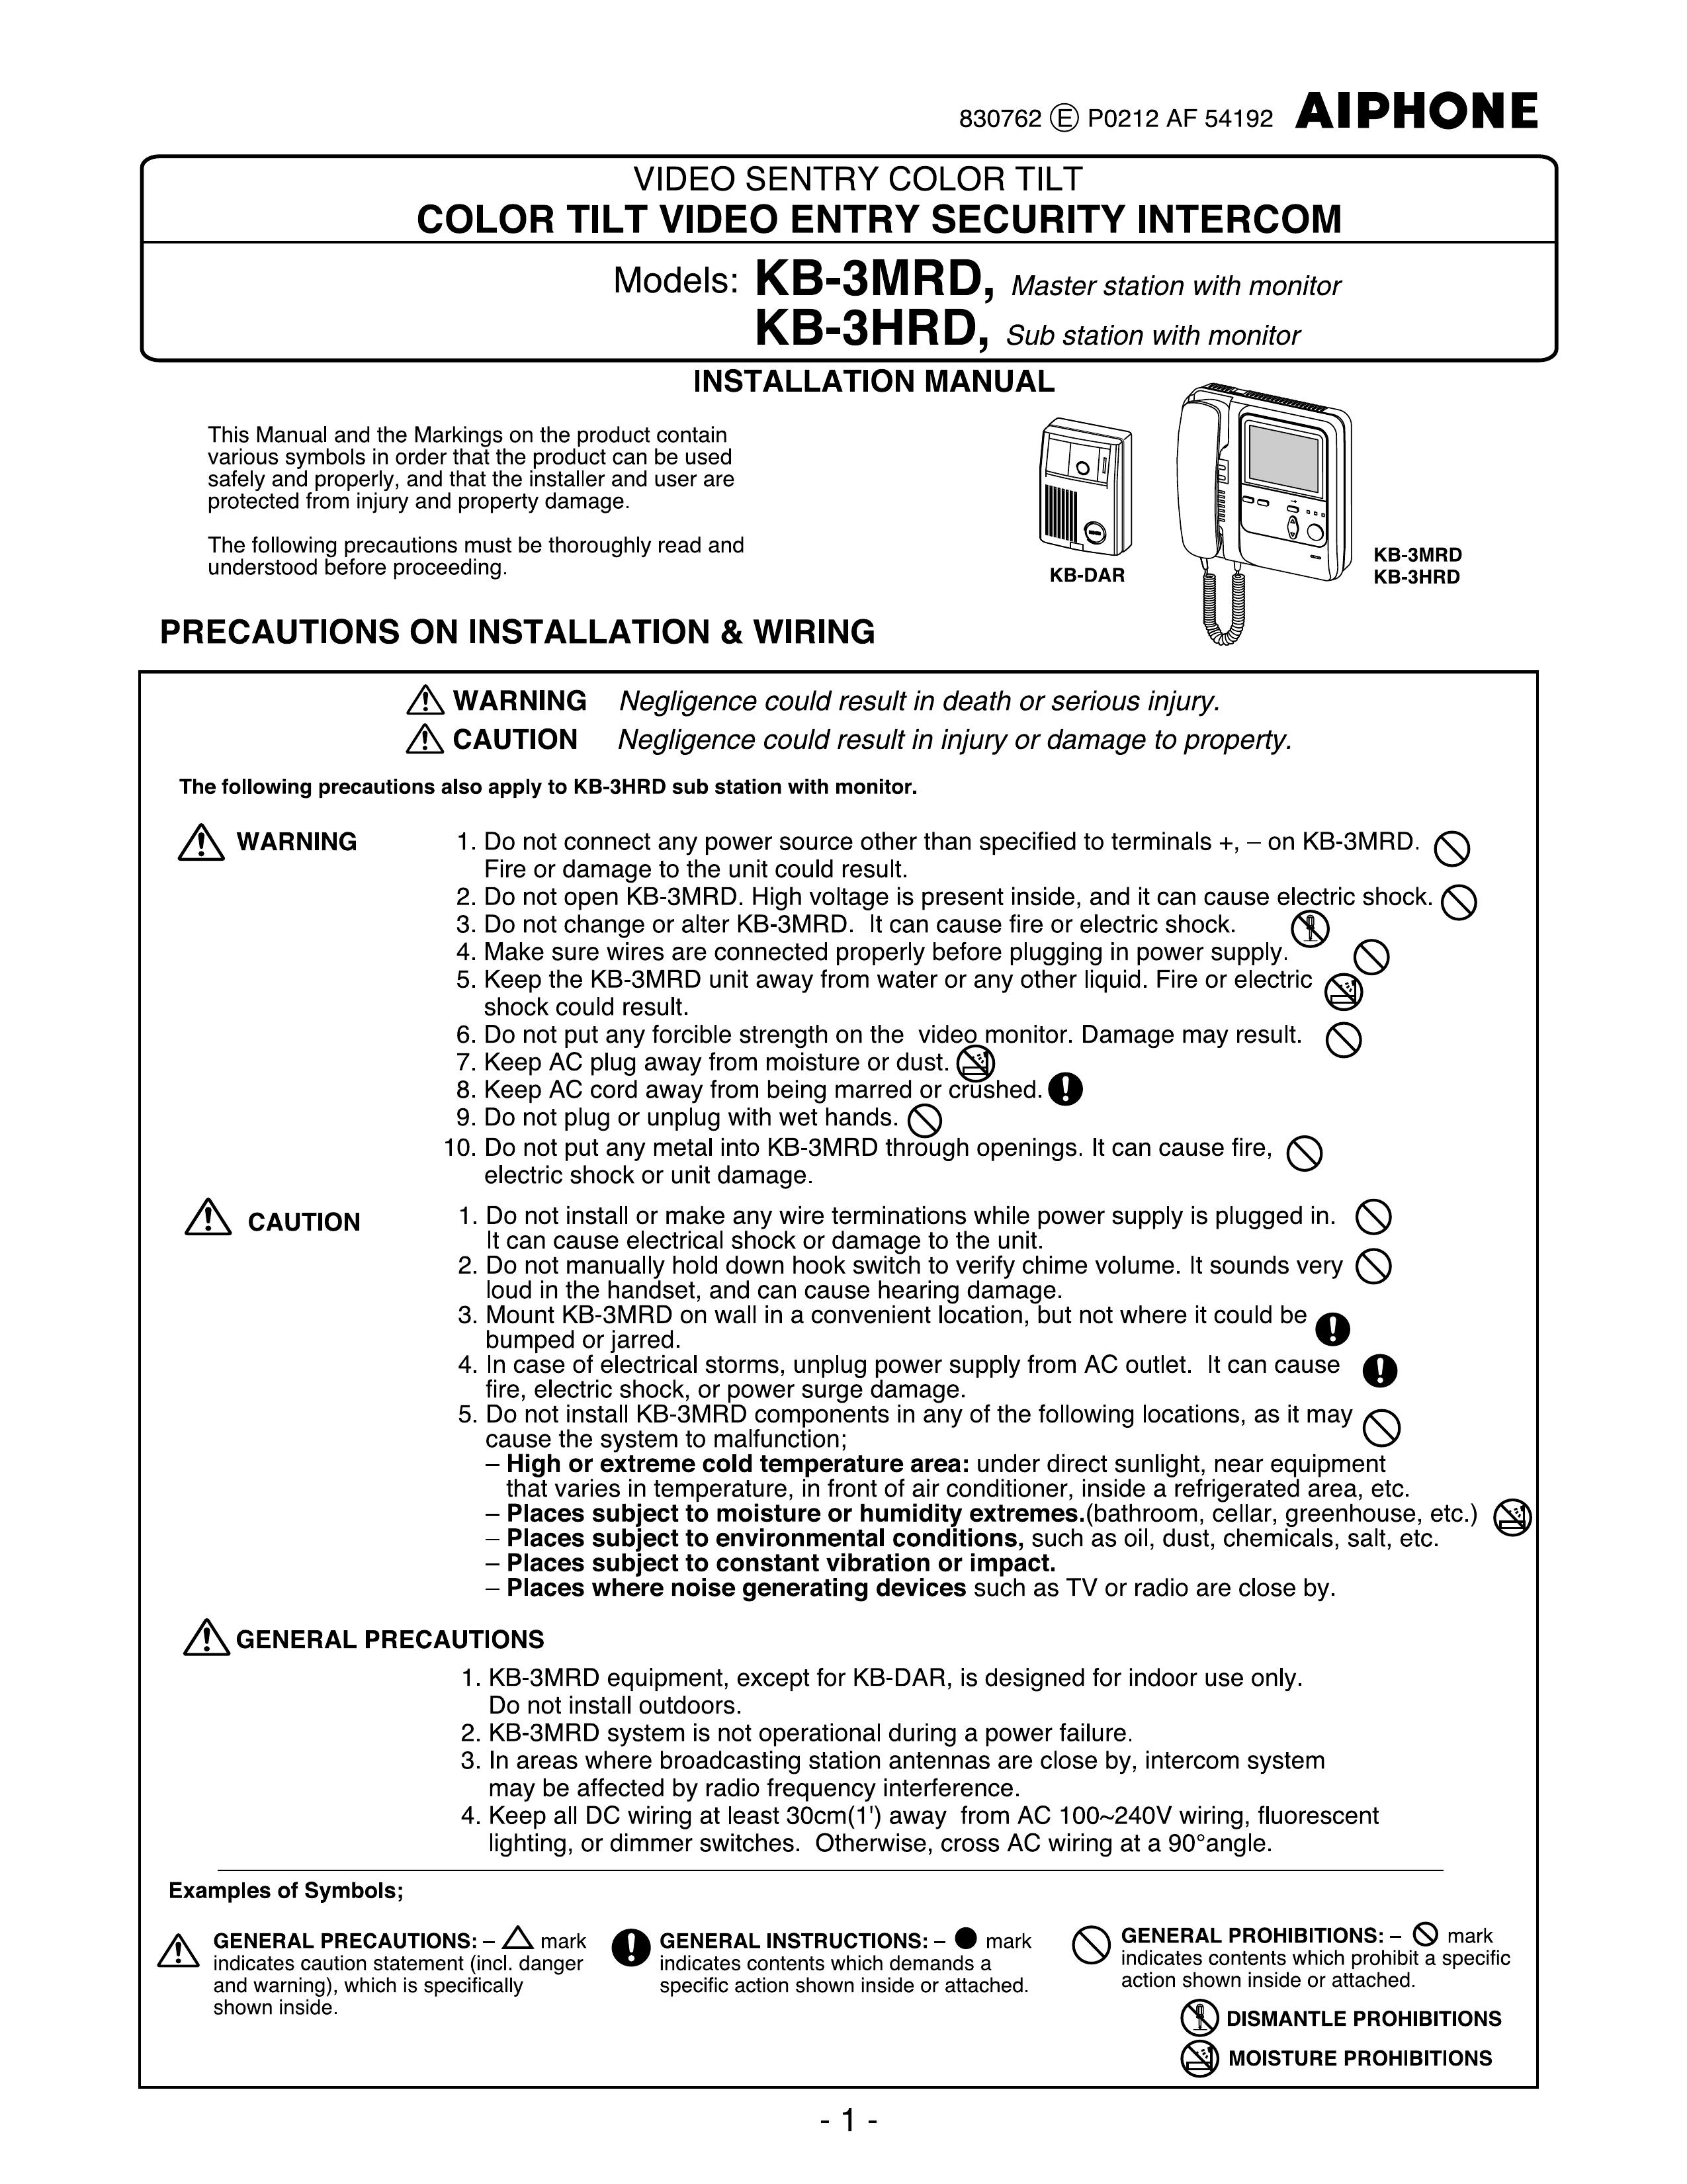 Aiphone KB-3HRD Security Camera User Manual